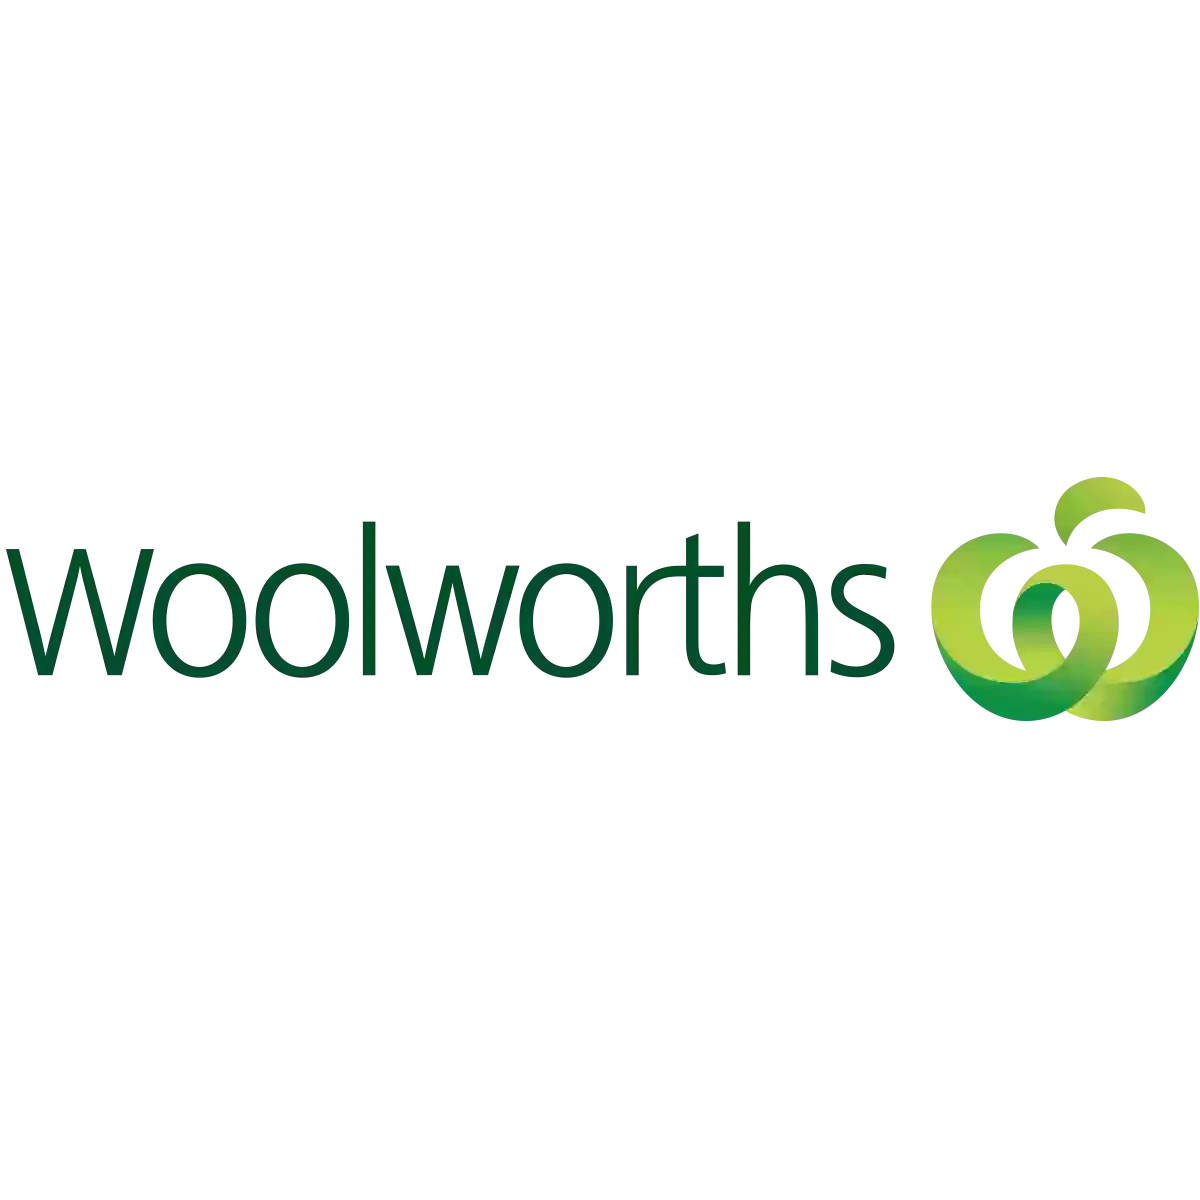 Woolworths Northgate